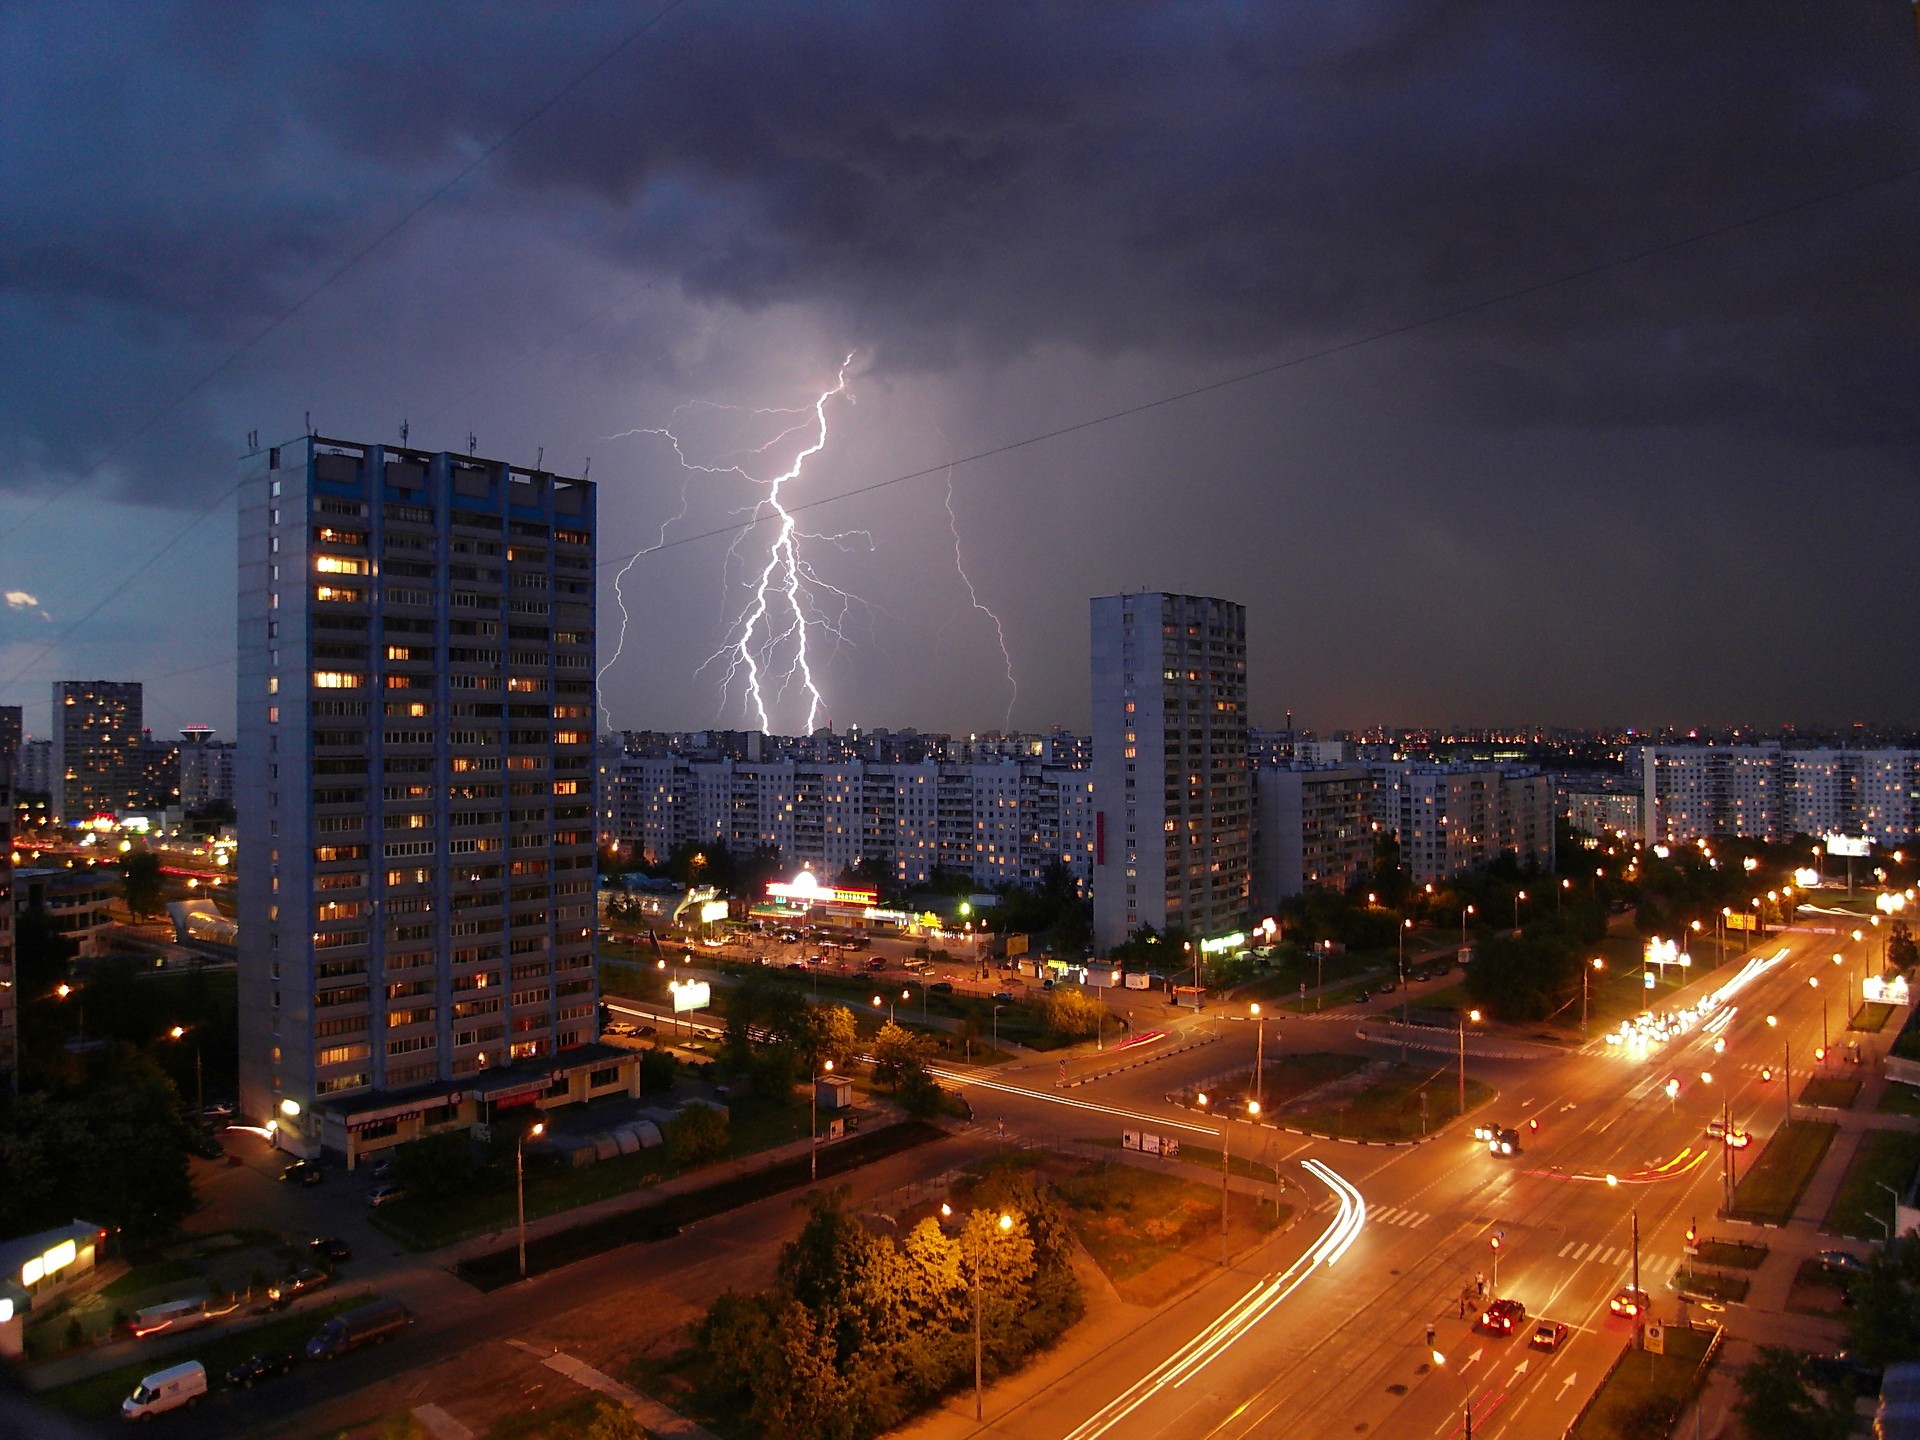 photography, lightning, cloud, storm, thunderstorm